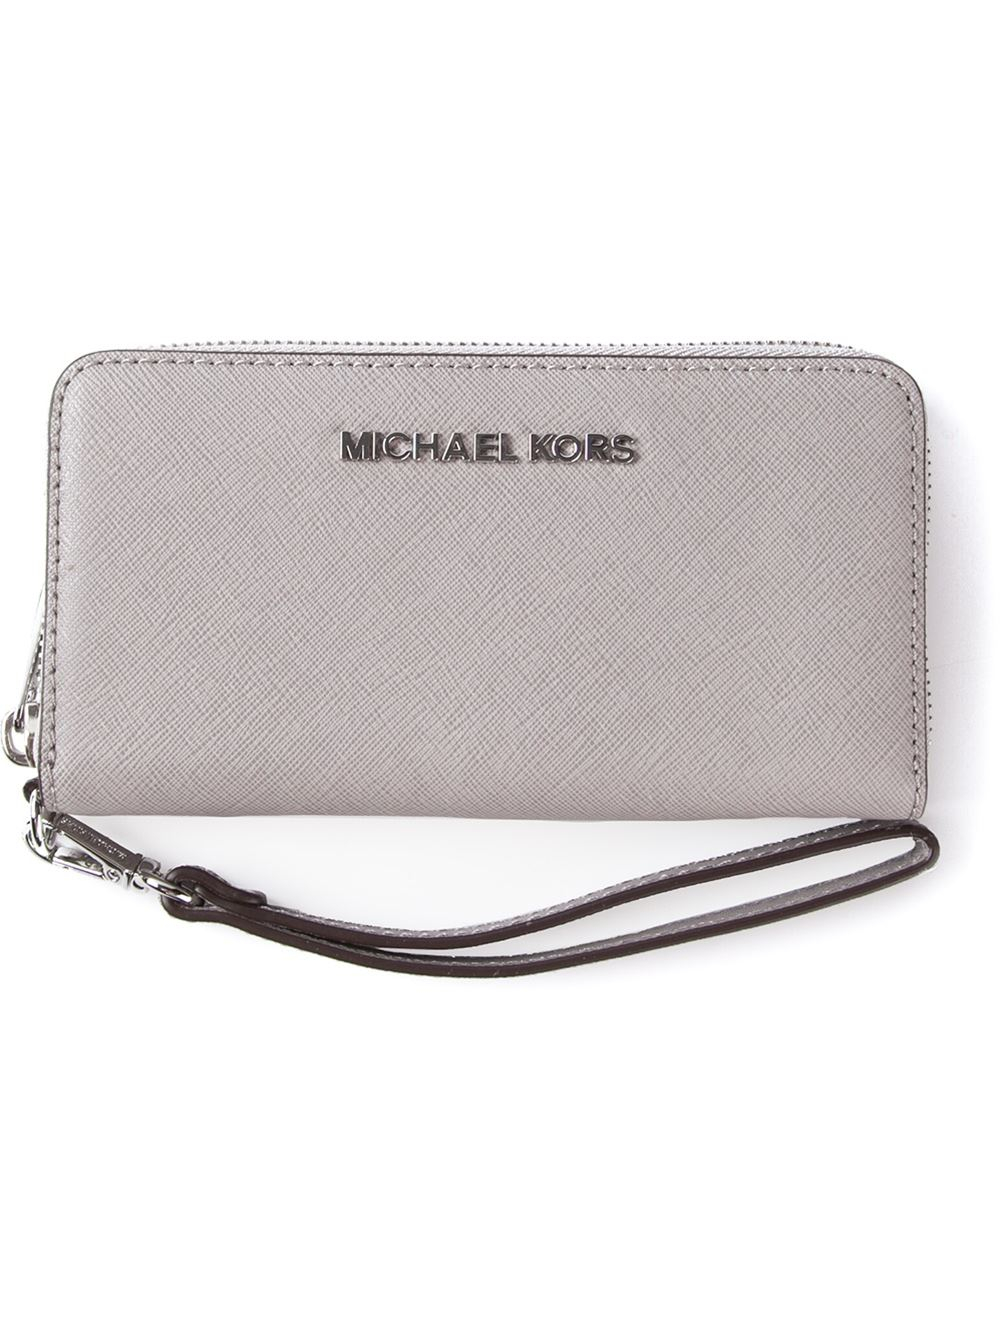 Michael michael kors 'jet Set Travel' Wallet in Gray (grey) | Lyst